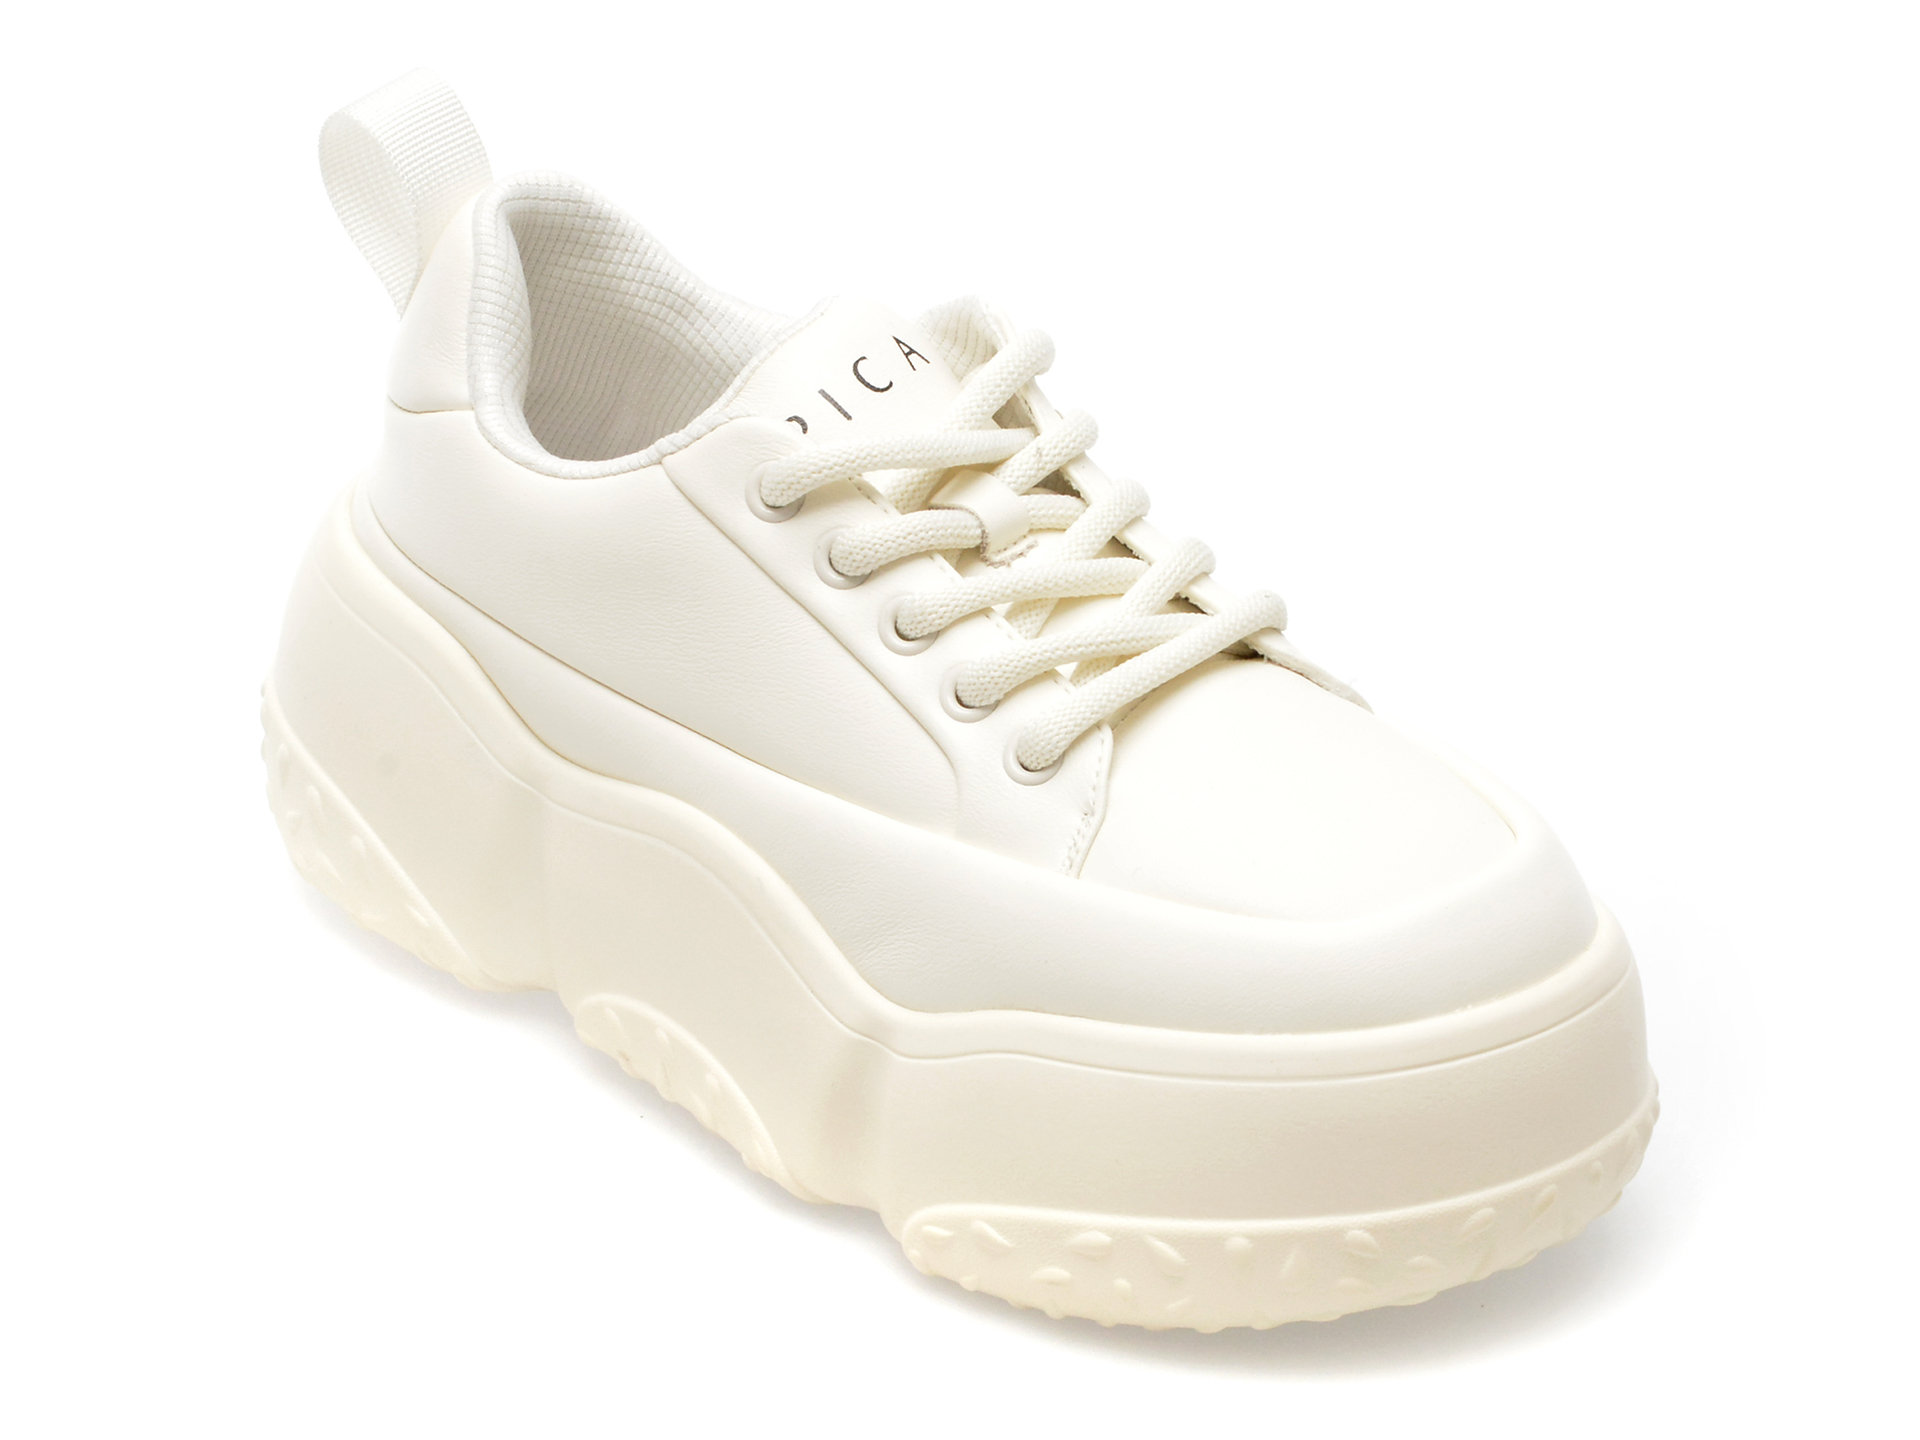 Pantofi EPICA albi, 889, din piele naturala